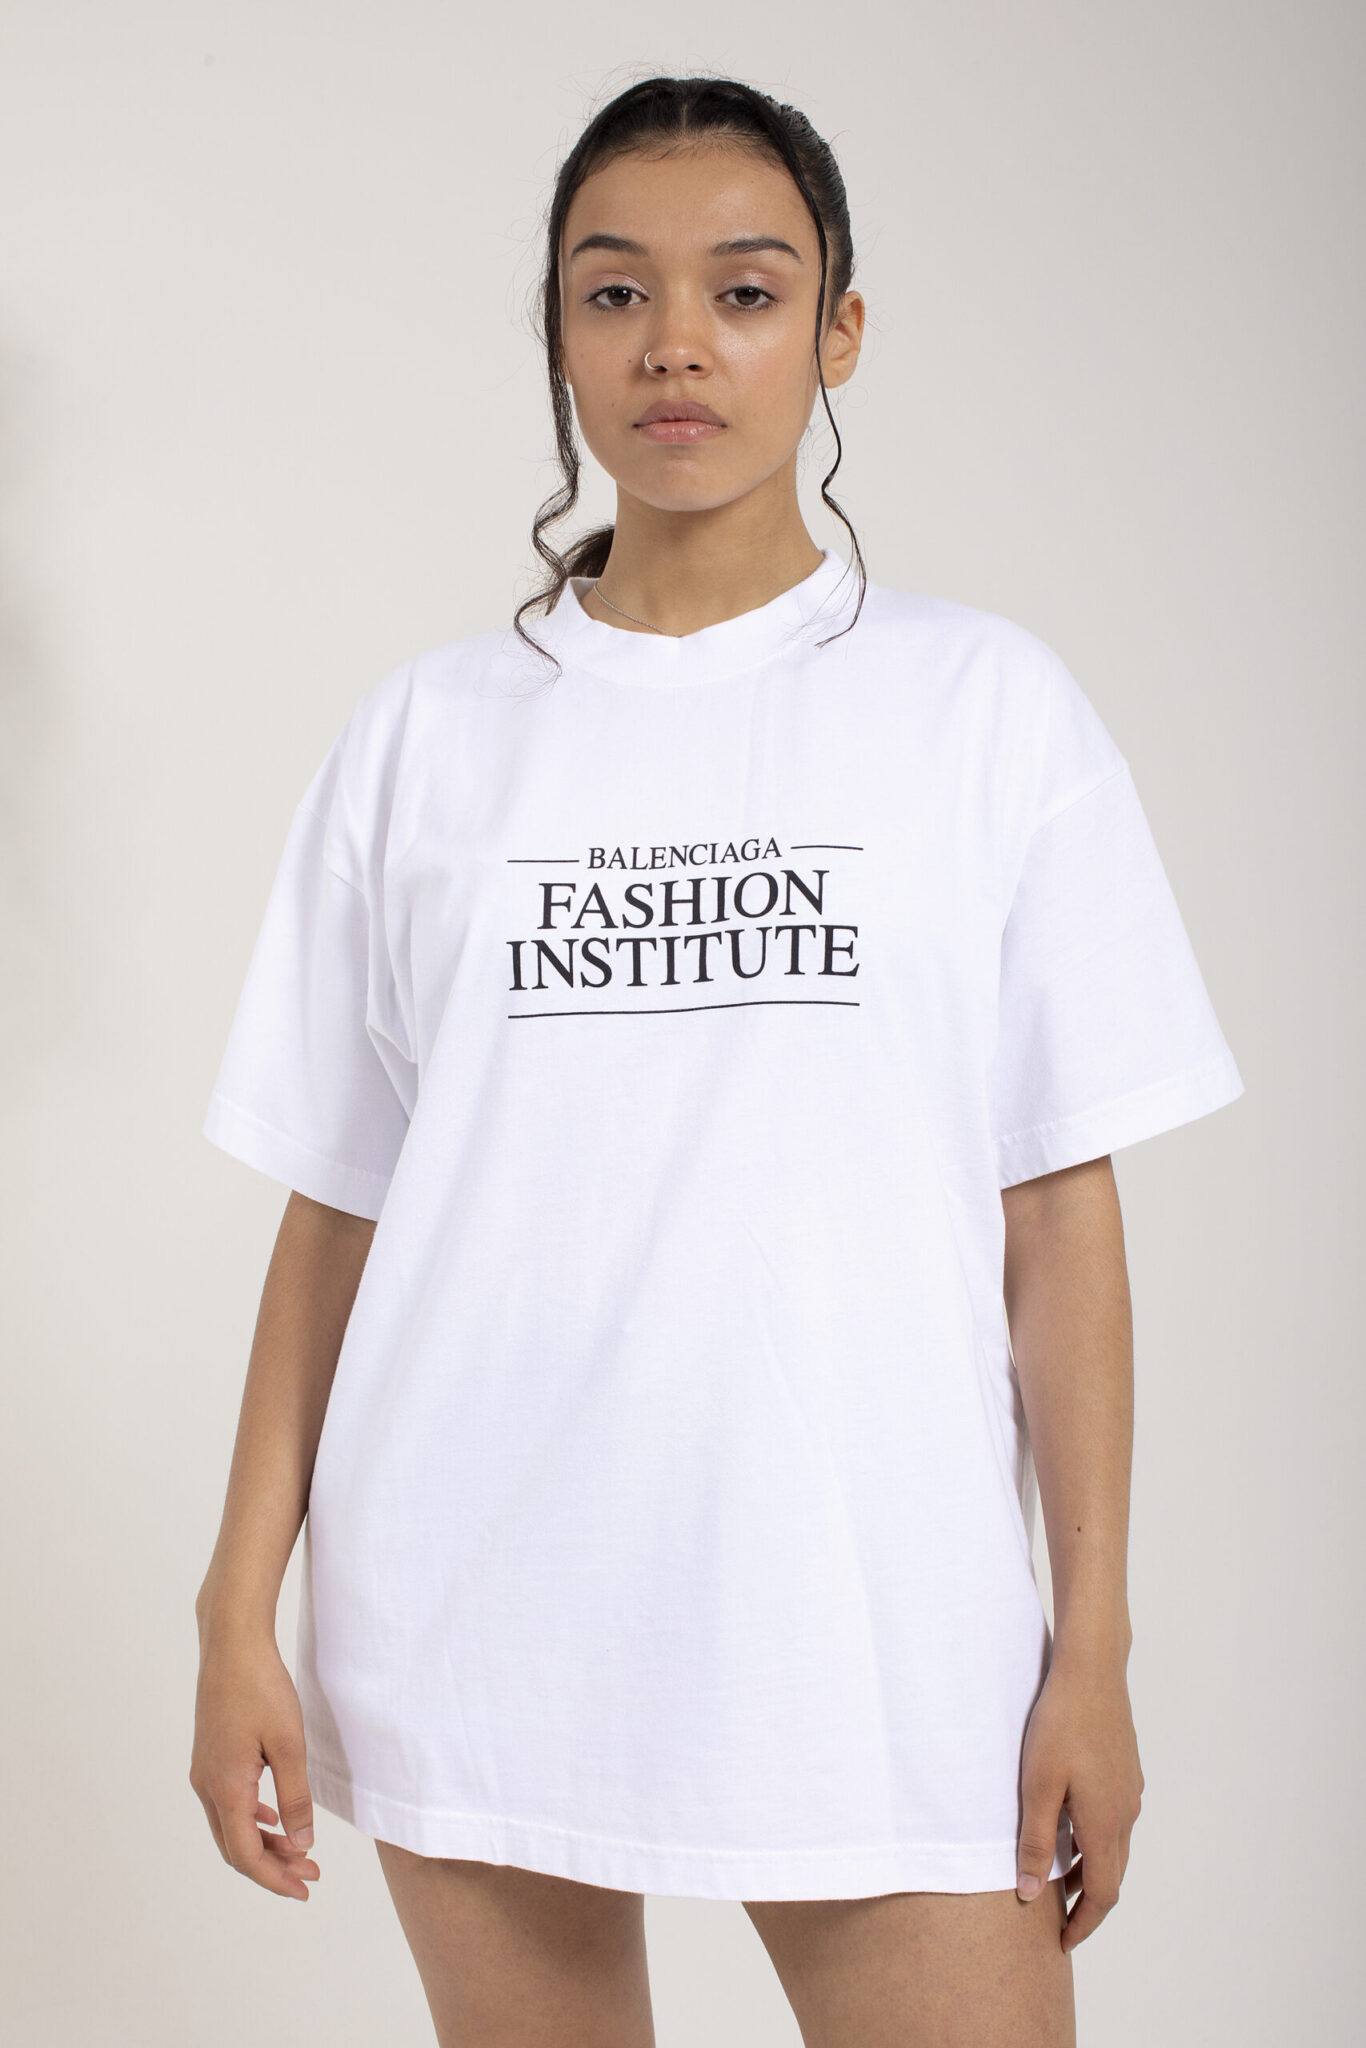 Balenciaga T shirt Fashion Insitute